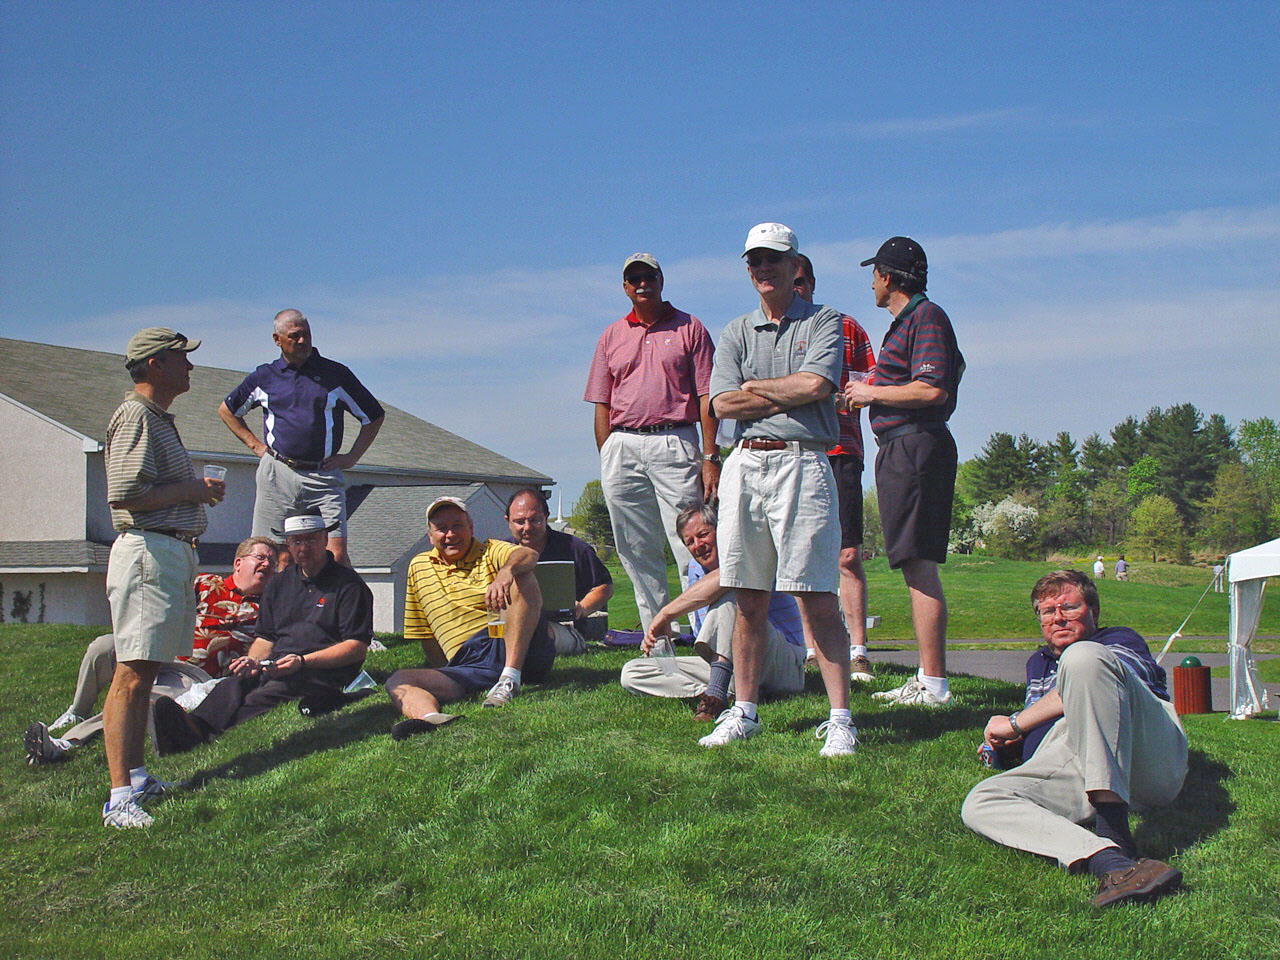  TK
2007 Golf Open
photo courtesy of Ed Beidel '76 